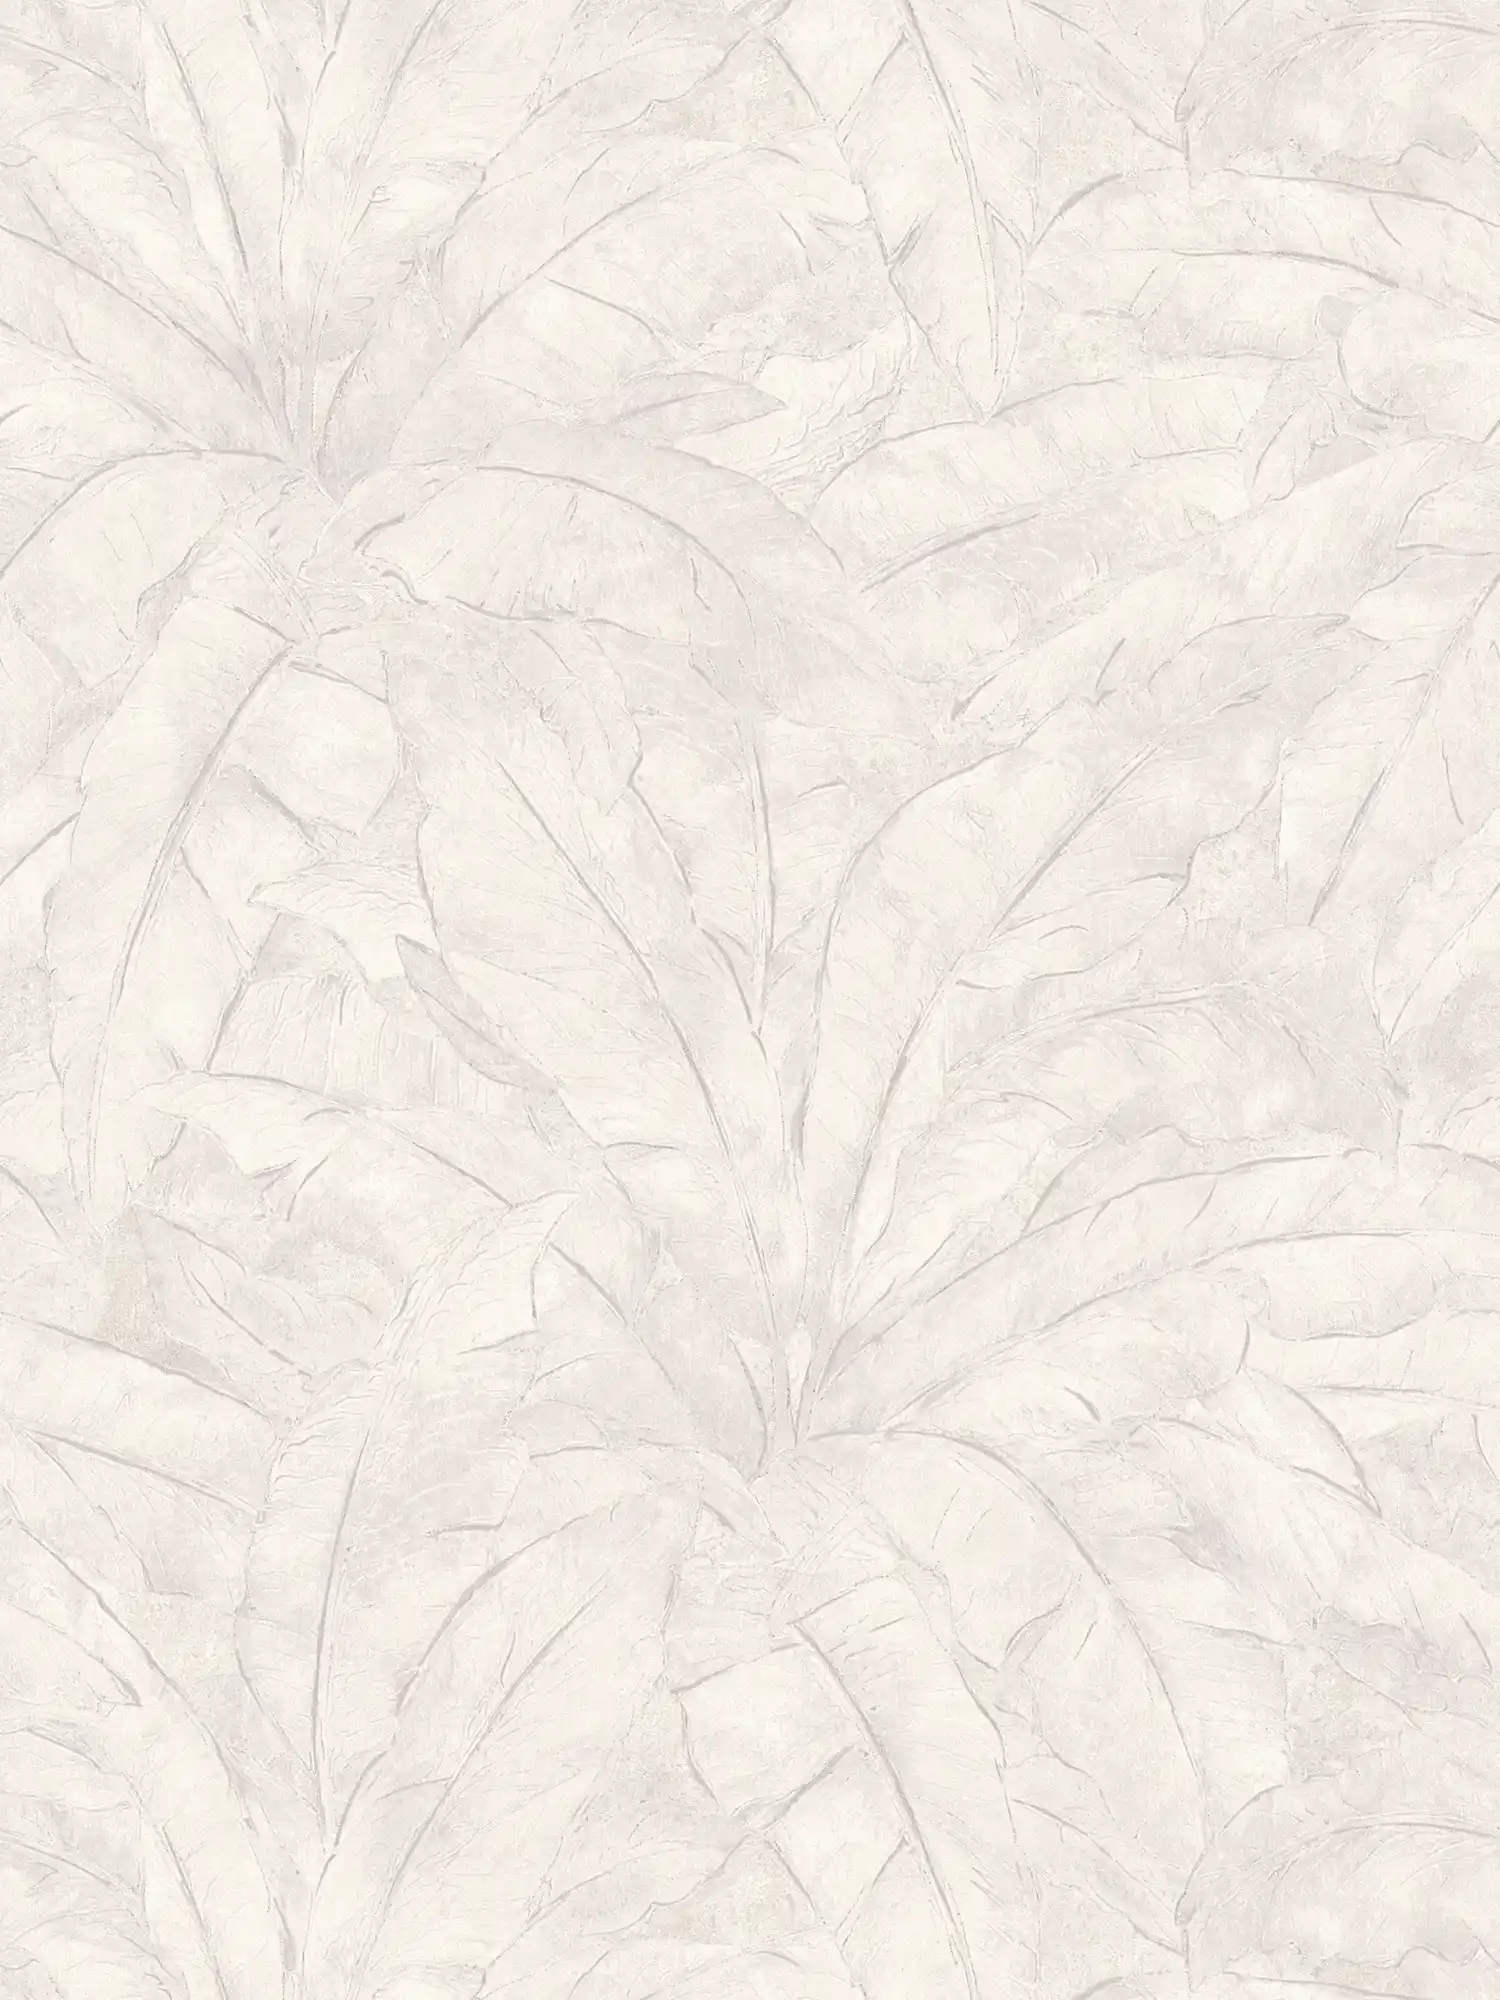 Jungle wallpaper with silver accent - grey, silver, white
